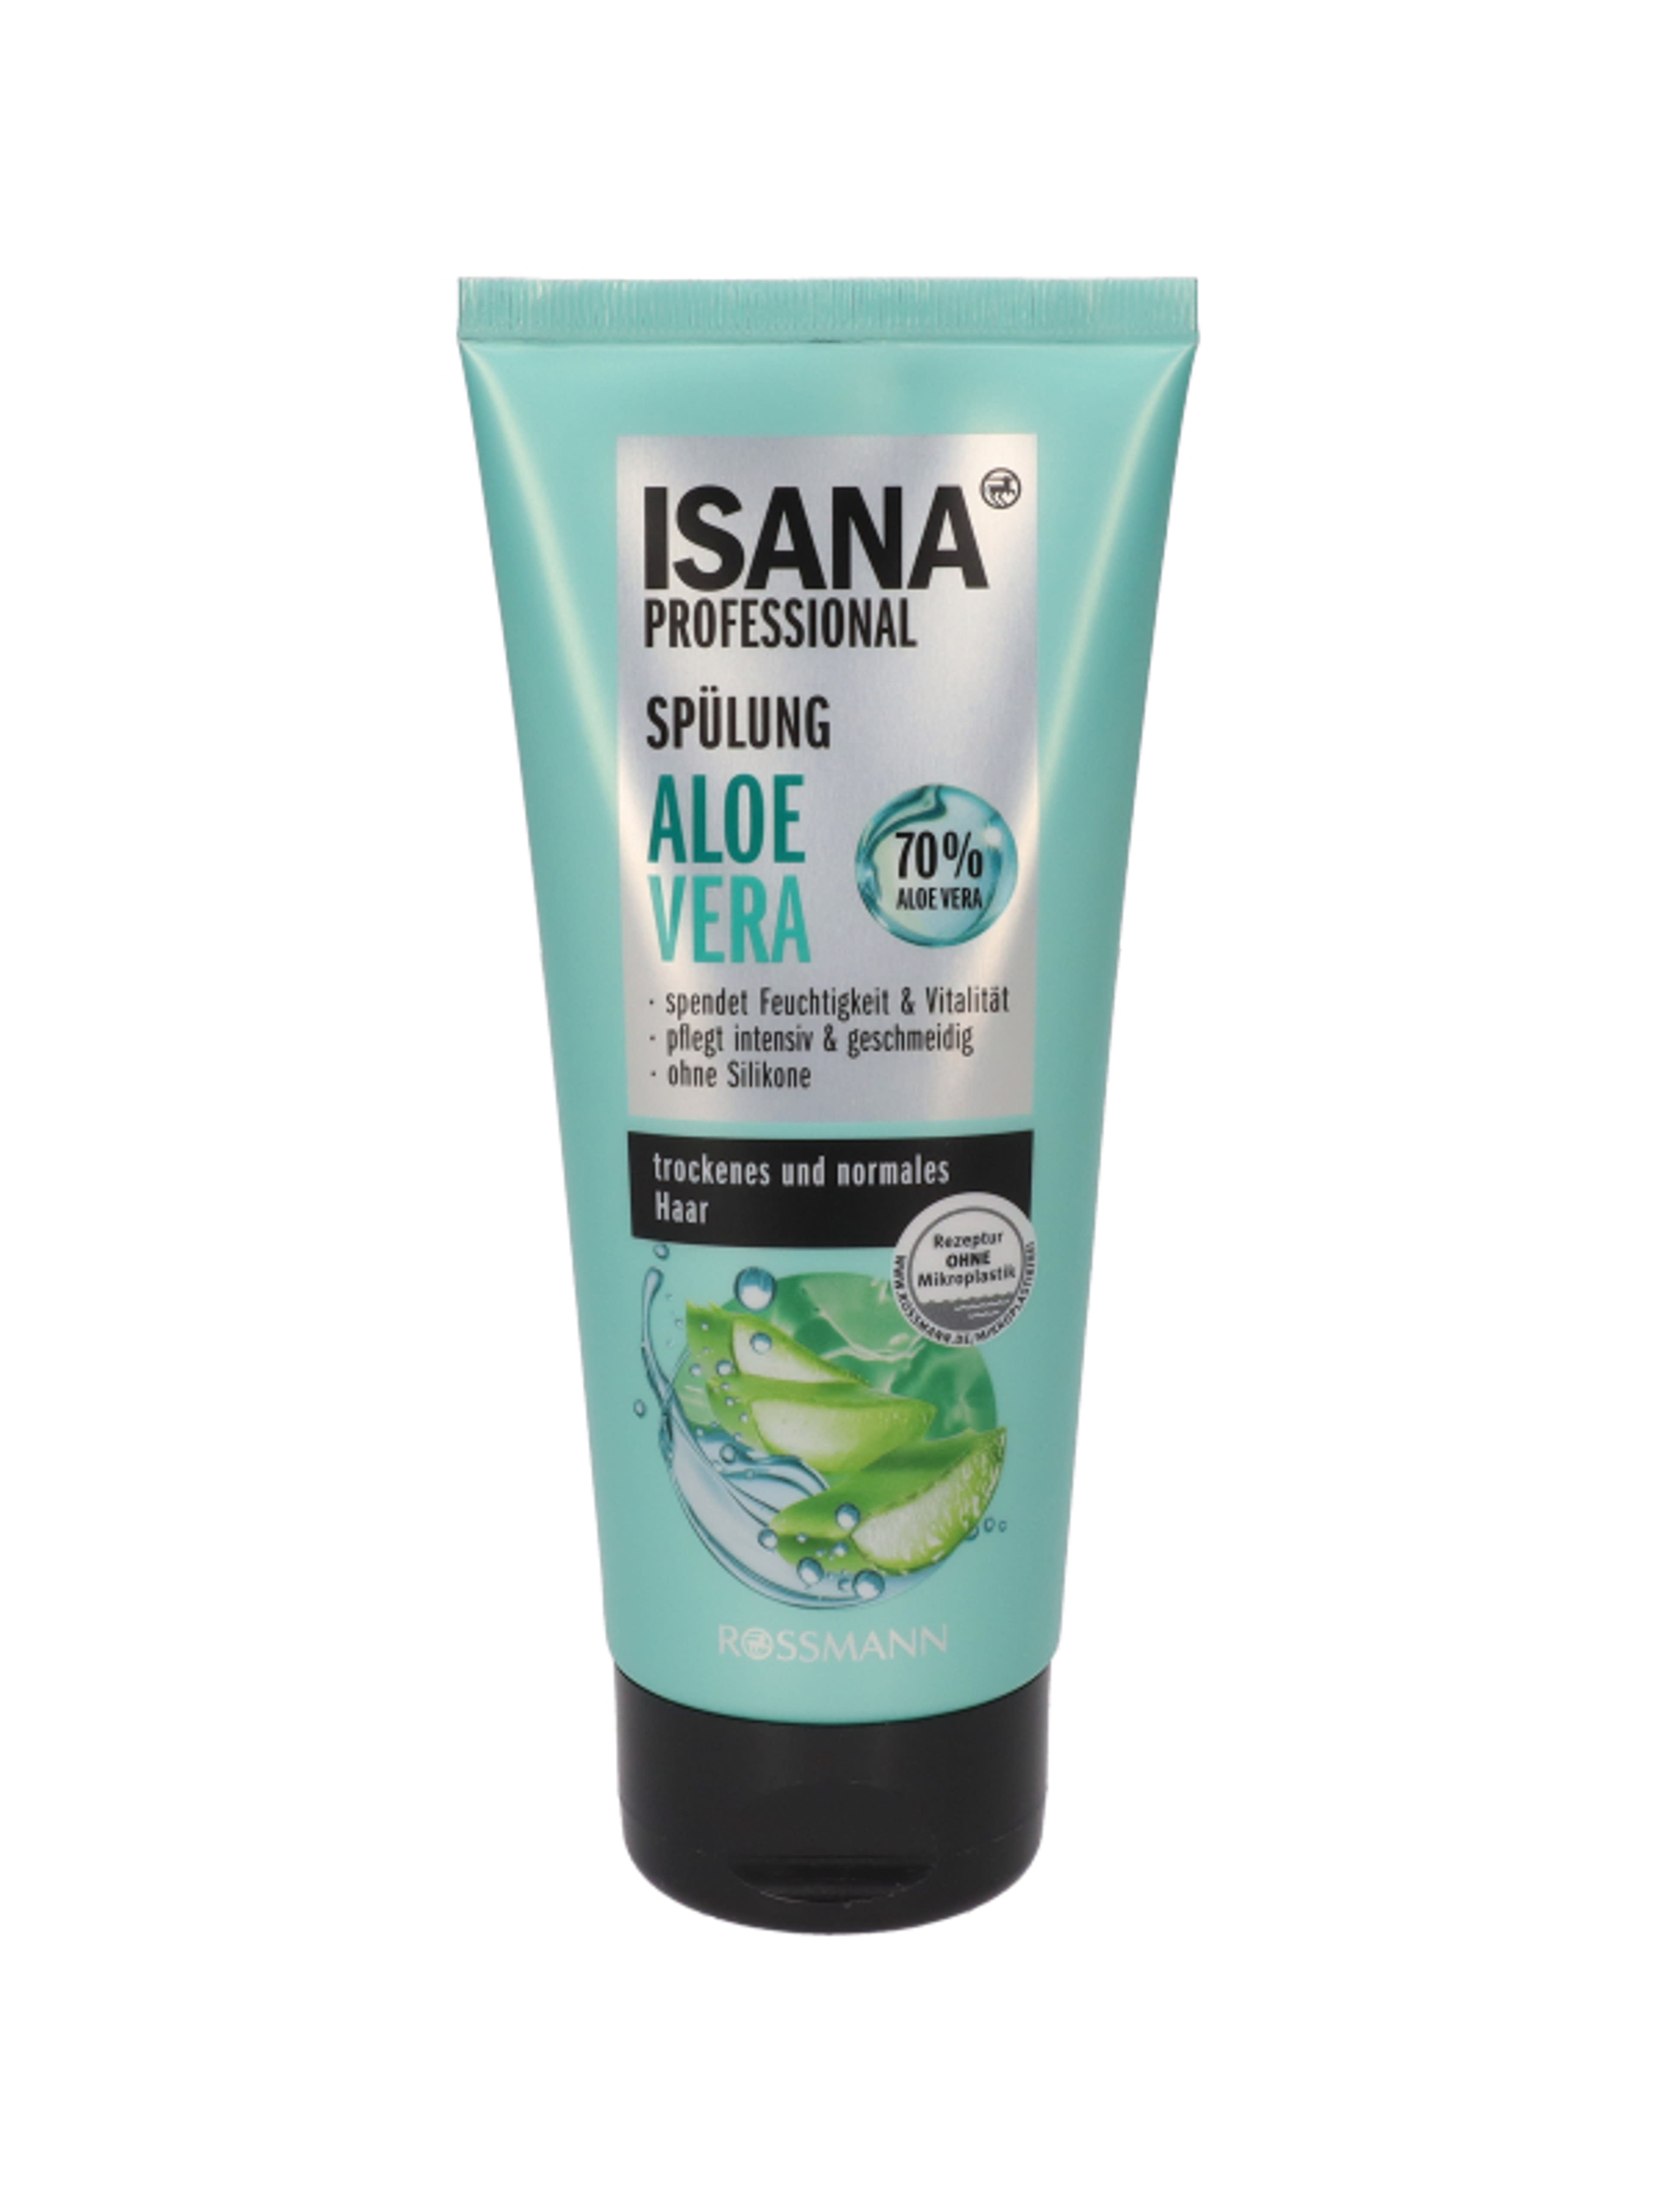 Isana Professional Aloe Vera hajbalzsam - 200 ml-1